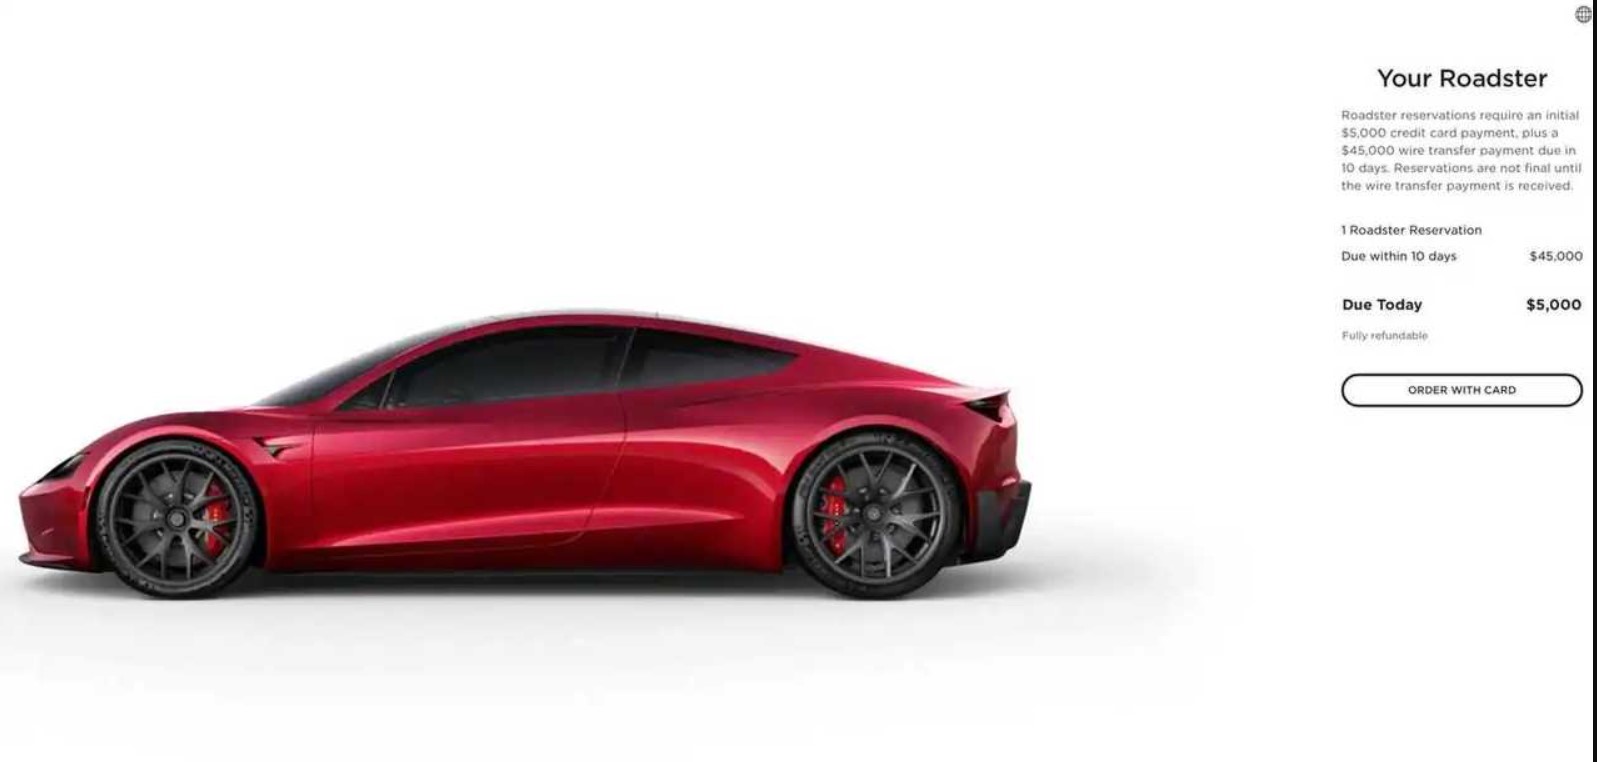 Tesla Roadster Specifications